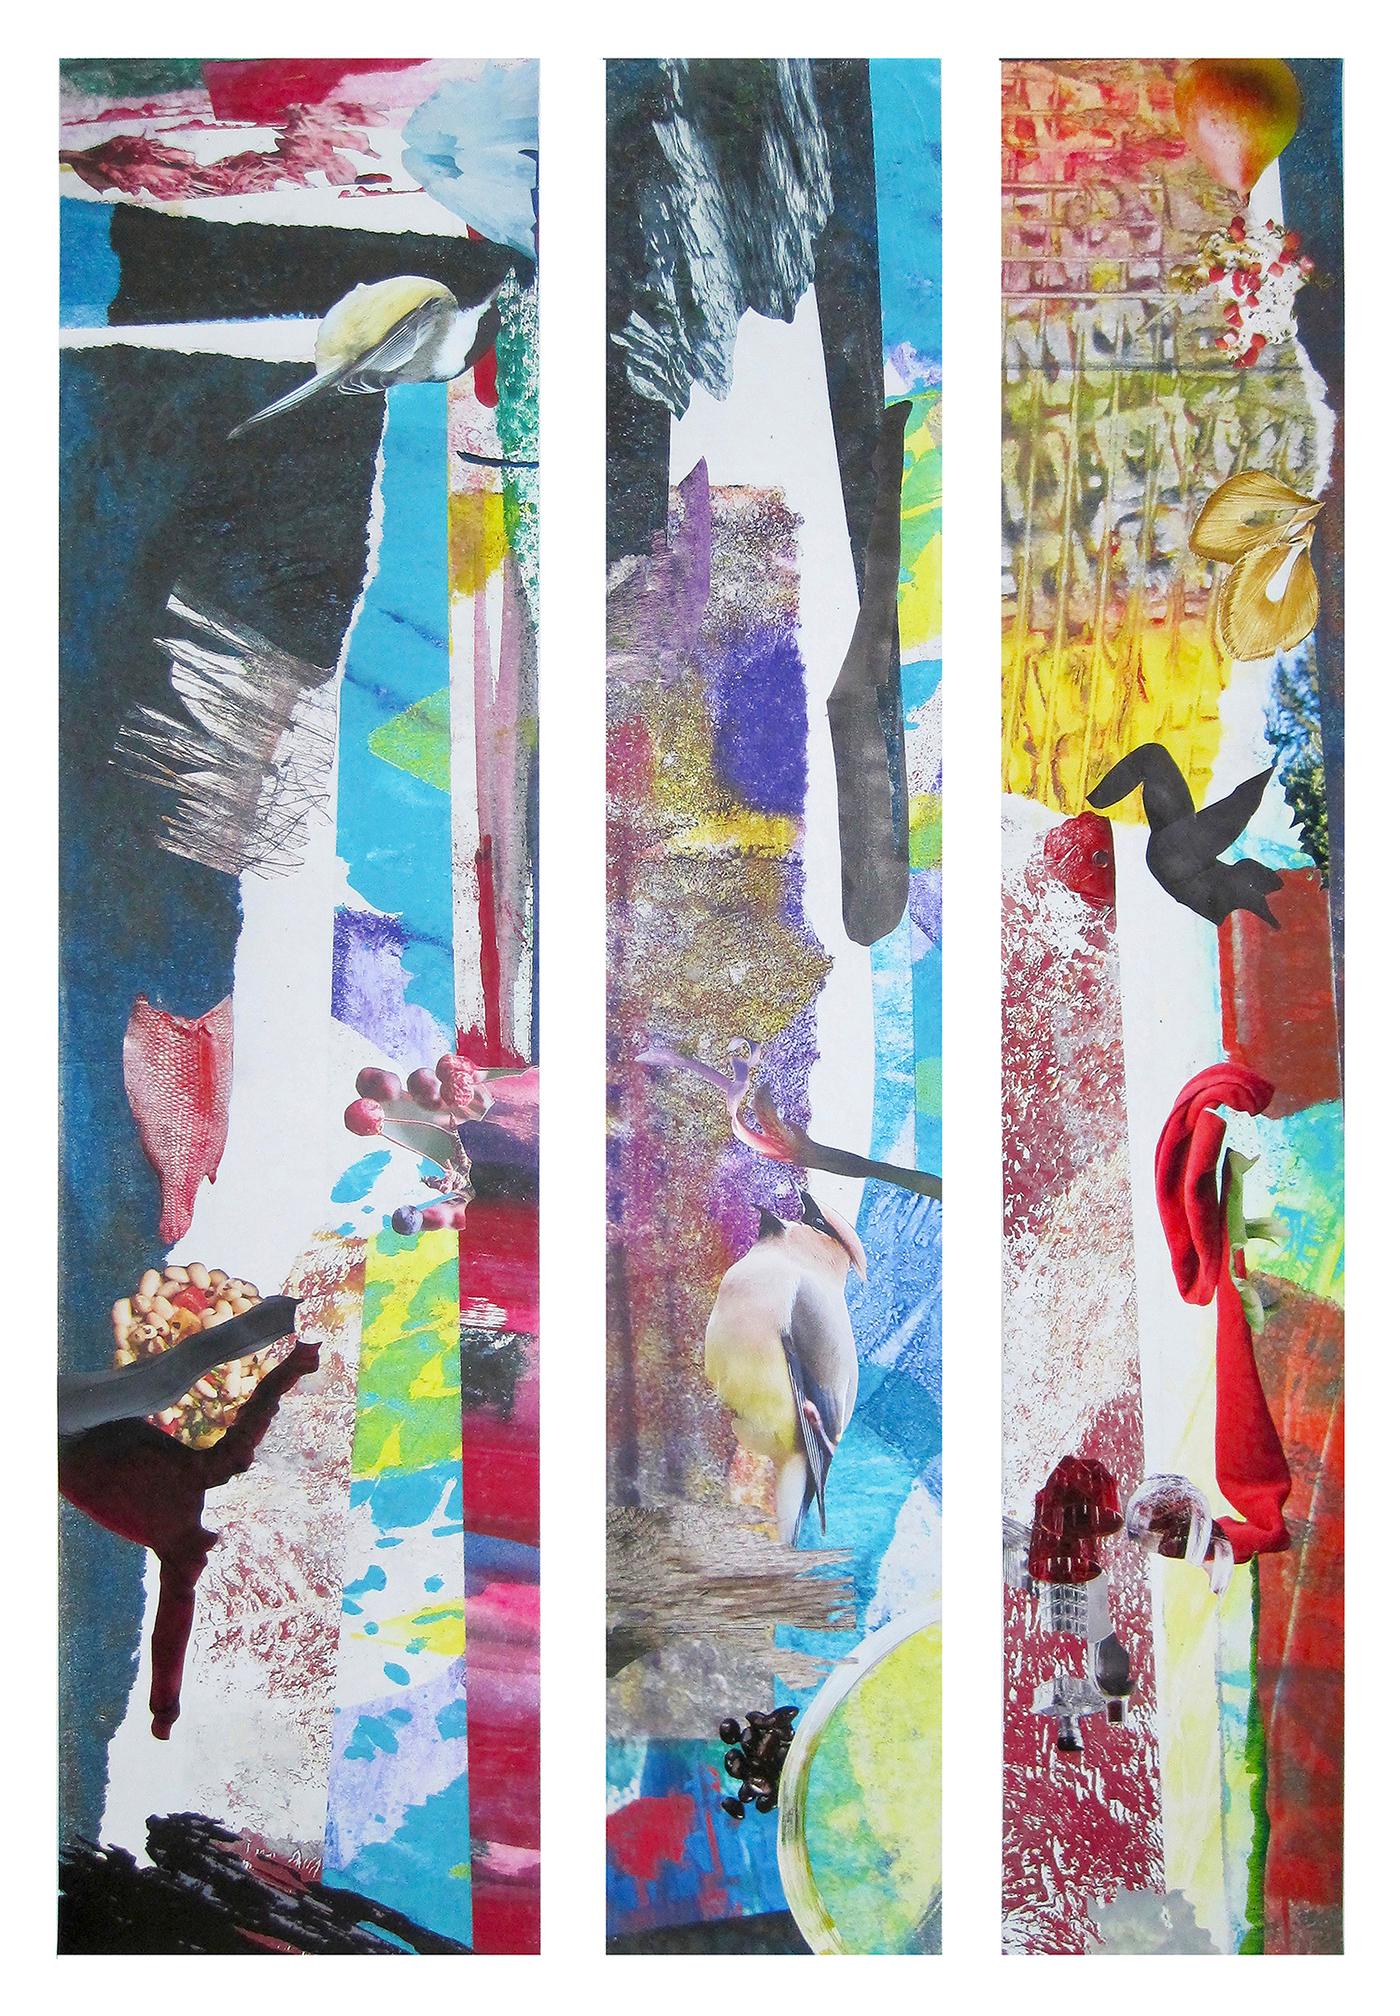 "Hawaiian Lollapalooza", surreal, abstract, collage, blues, reds, birds, fish - Mixed Media Art by Monica DeSalvo